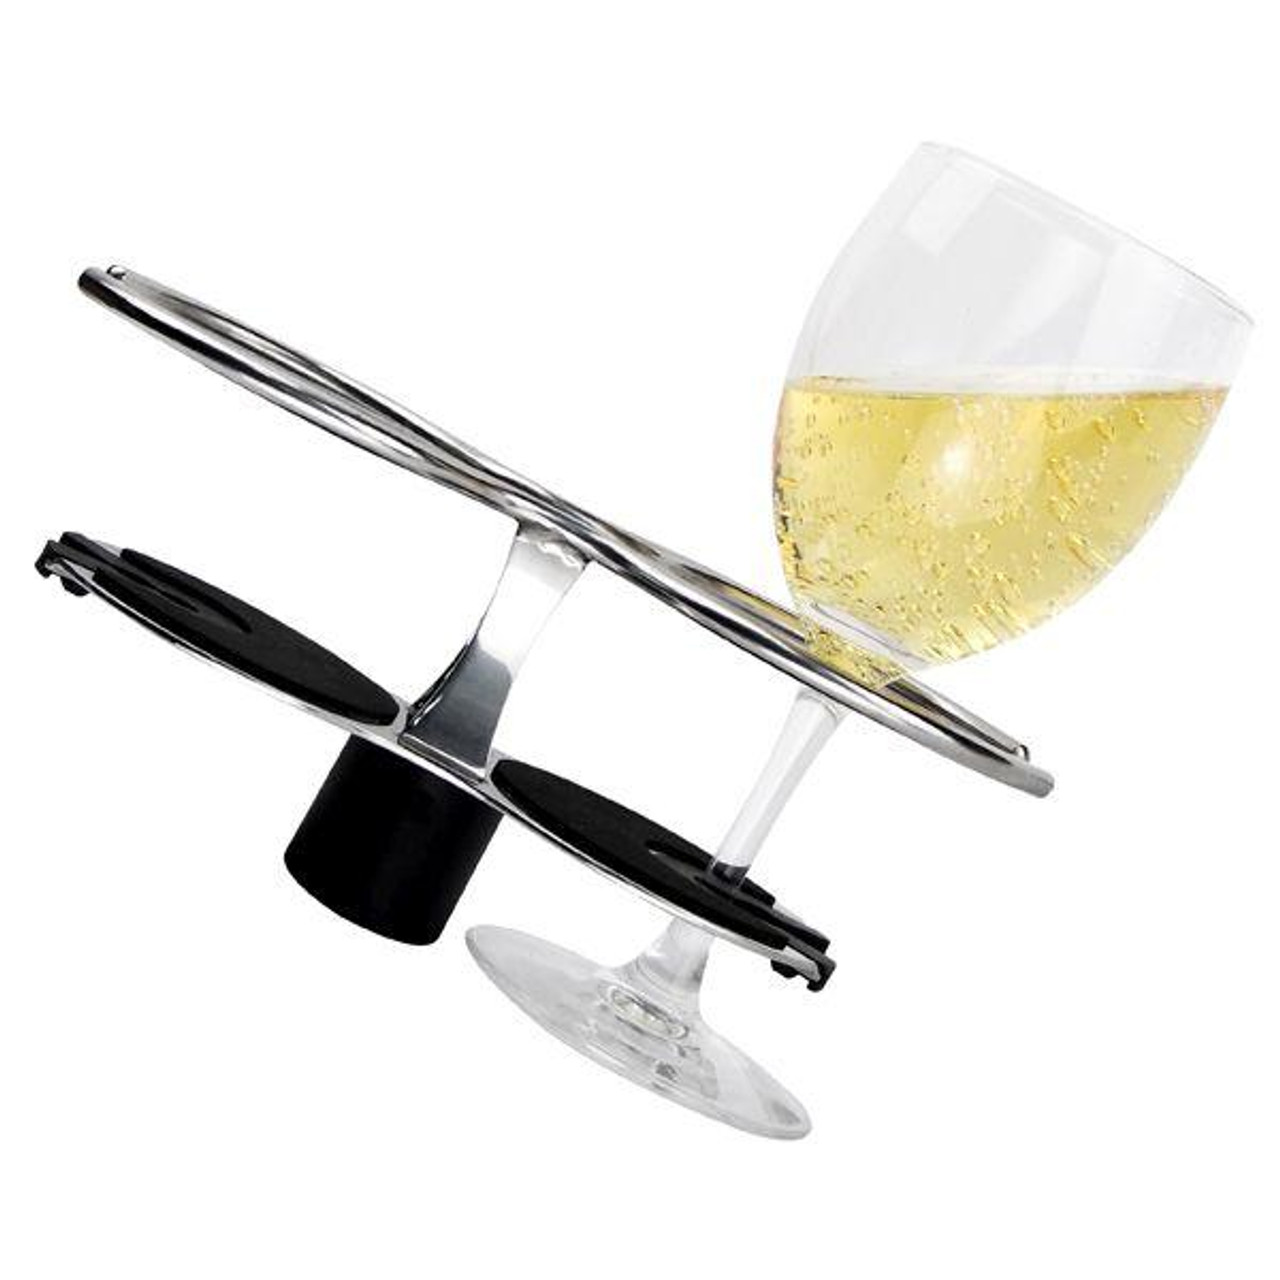 Boat & Marine Stainless Steel Wine Glass Holder (2-Pack)